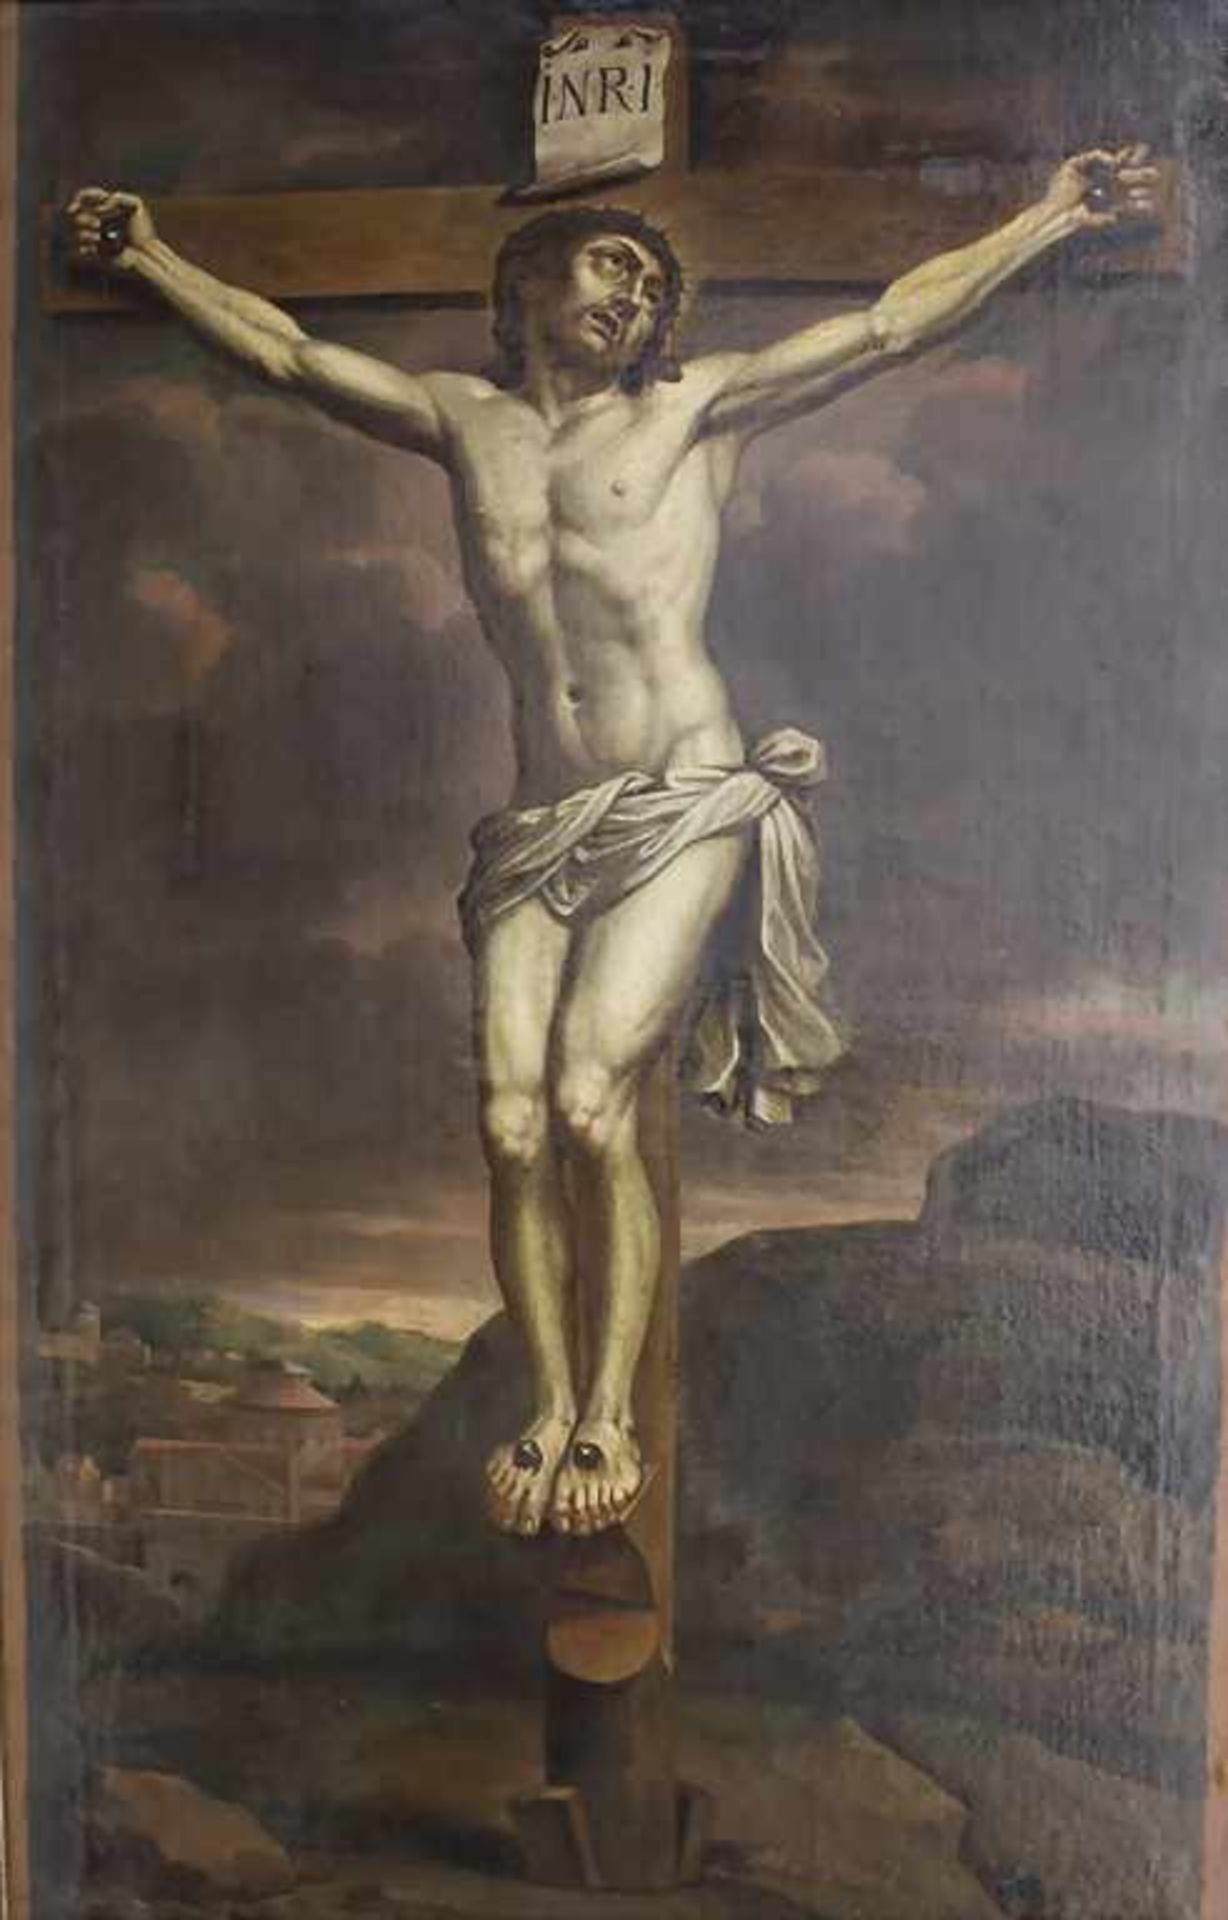 Künstler des 18. Jh., 'Kreuzigungsszene' / 'A crucifixion scene'Technik: Öl auf Leinwand (